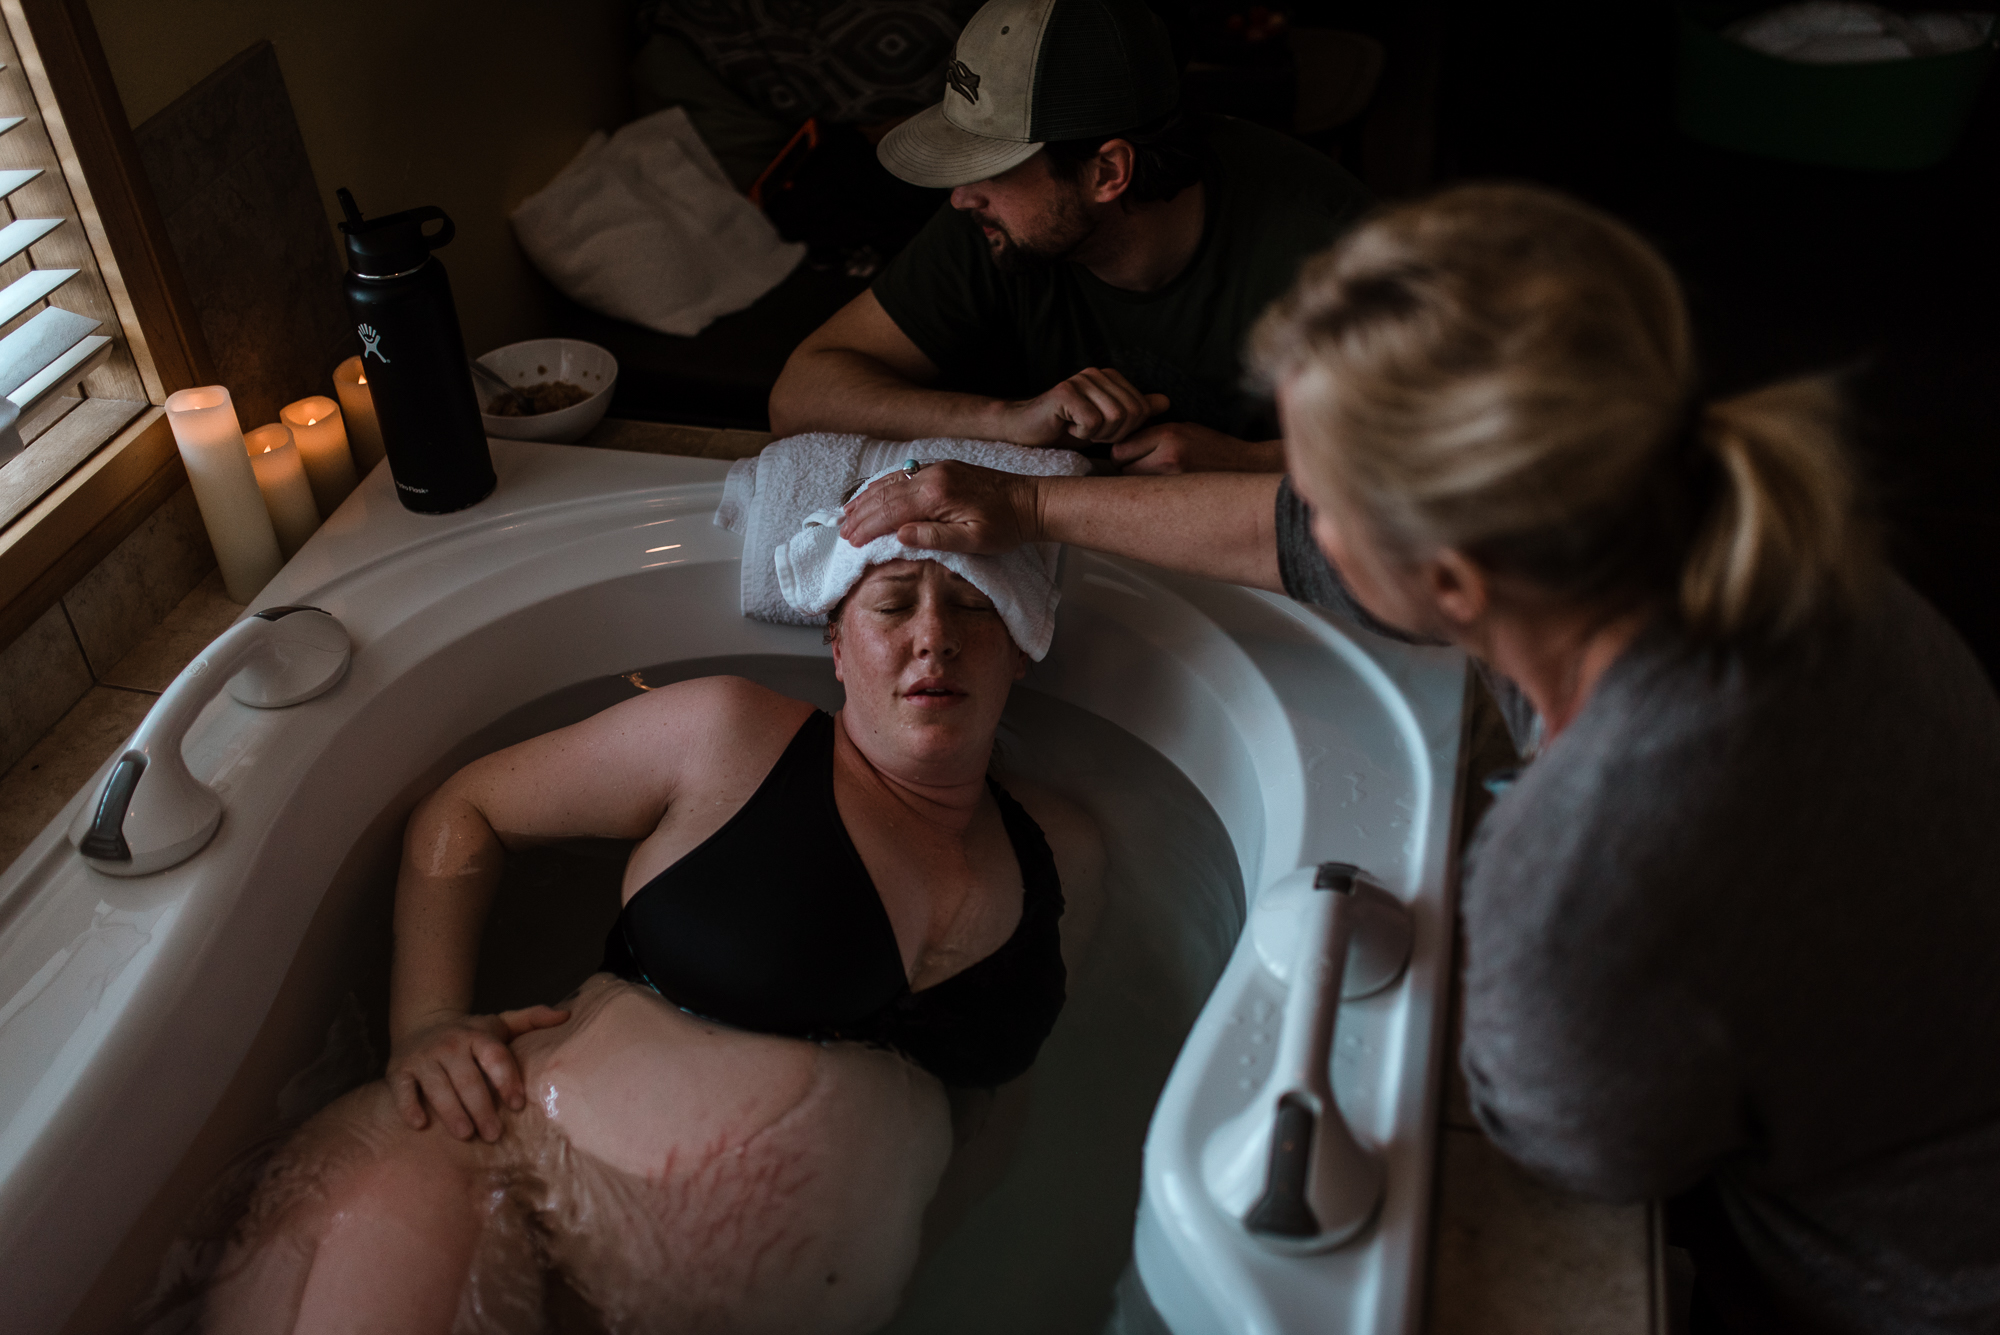 Meredith Westin Photography- Minnesota Birth Stories-March 27, 2019-080519.jpg